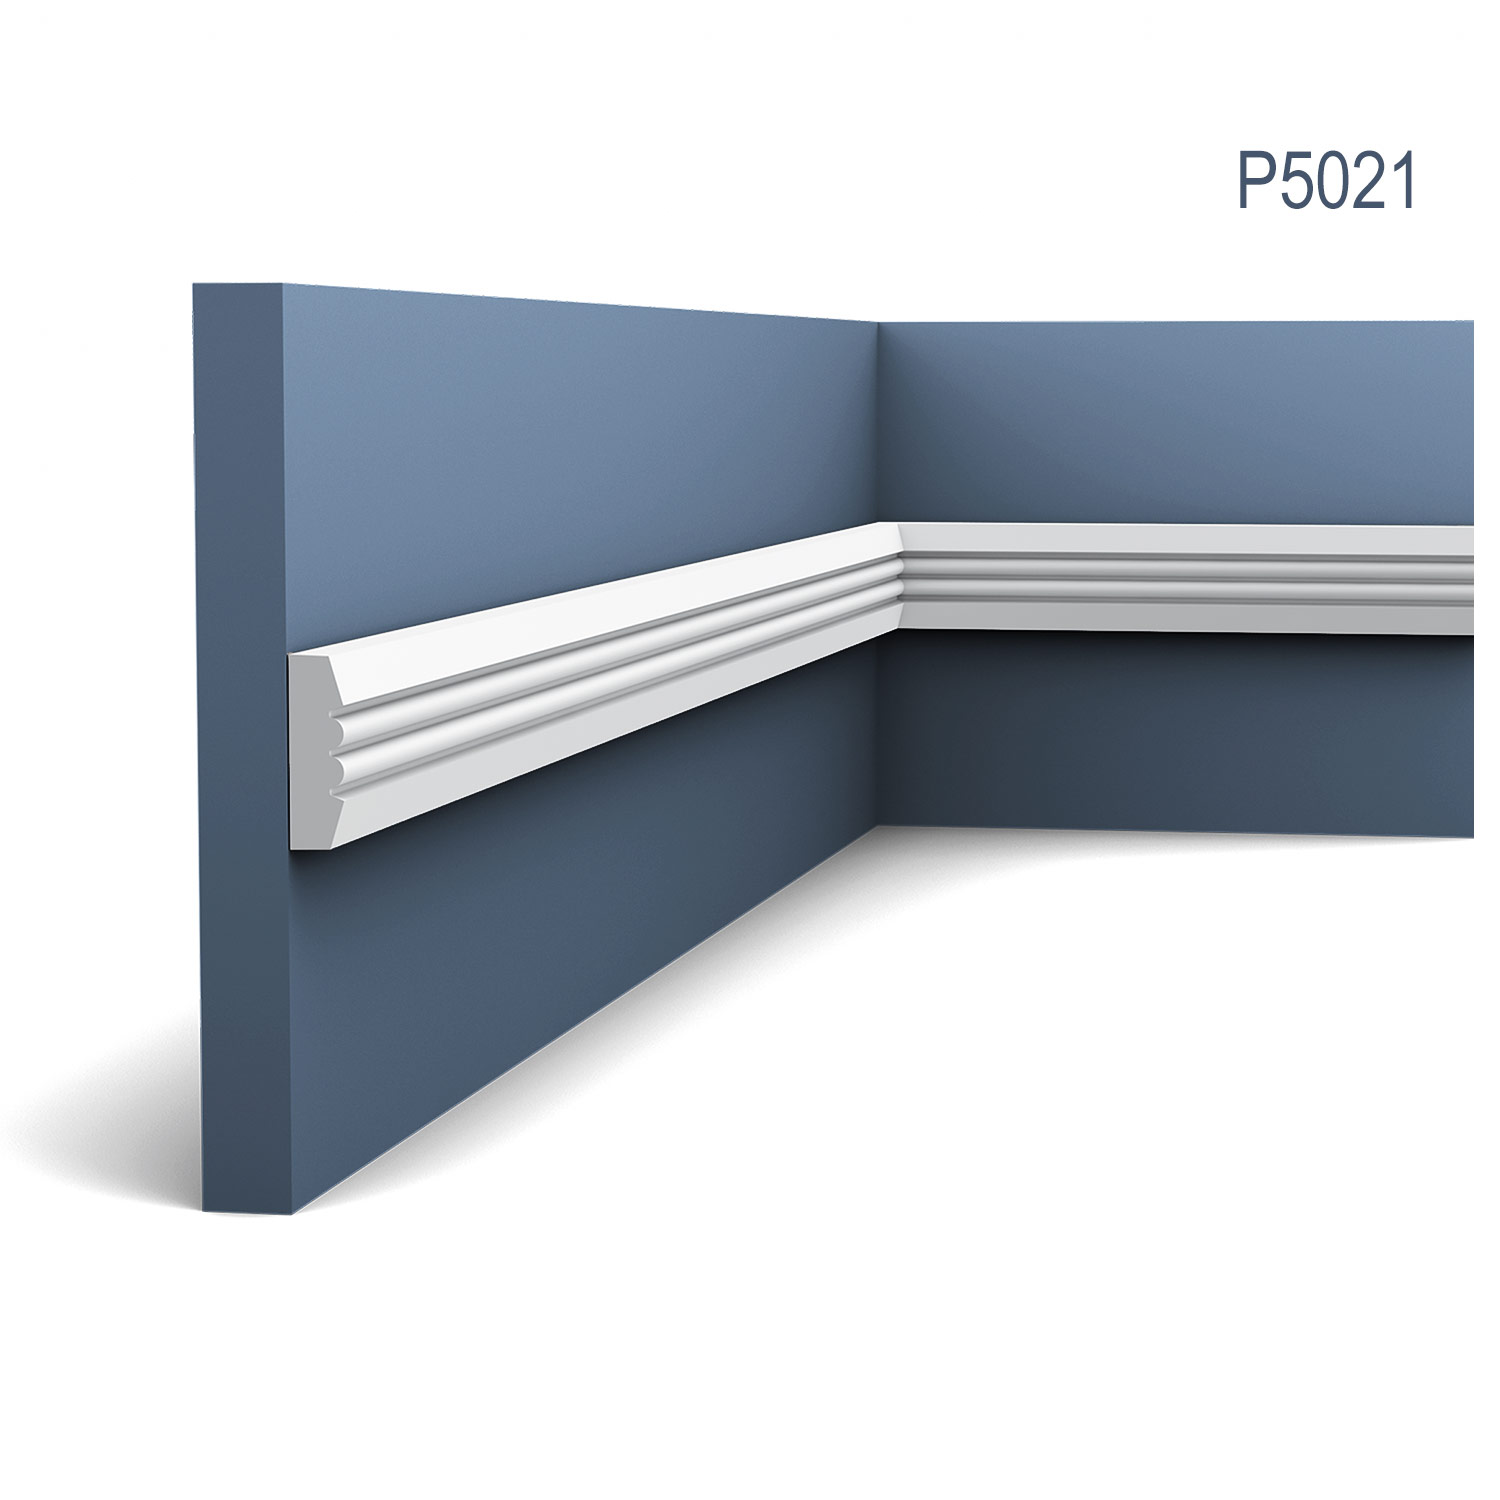 Brau intermediar P5021, profil decorativ multifunctional, pentru perete, alba, vopsibila, rigida, calitate excelenta, Belgia, din Poliuretan rigid, L 200 x H 3.1 x W 0.9 cm